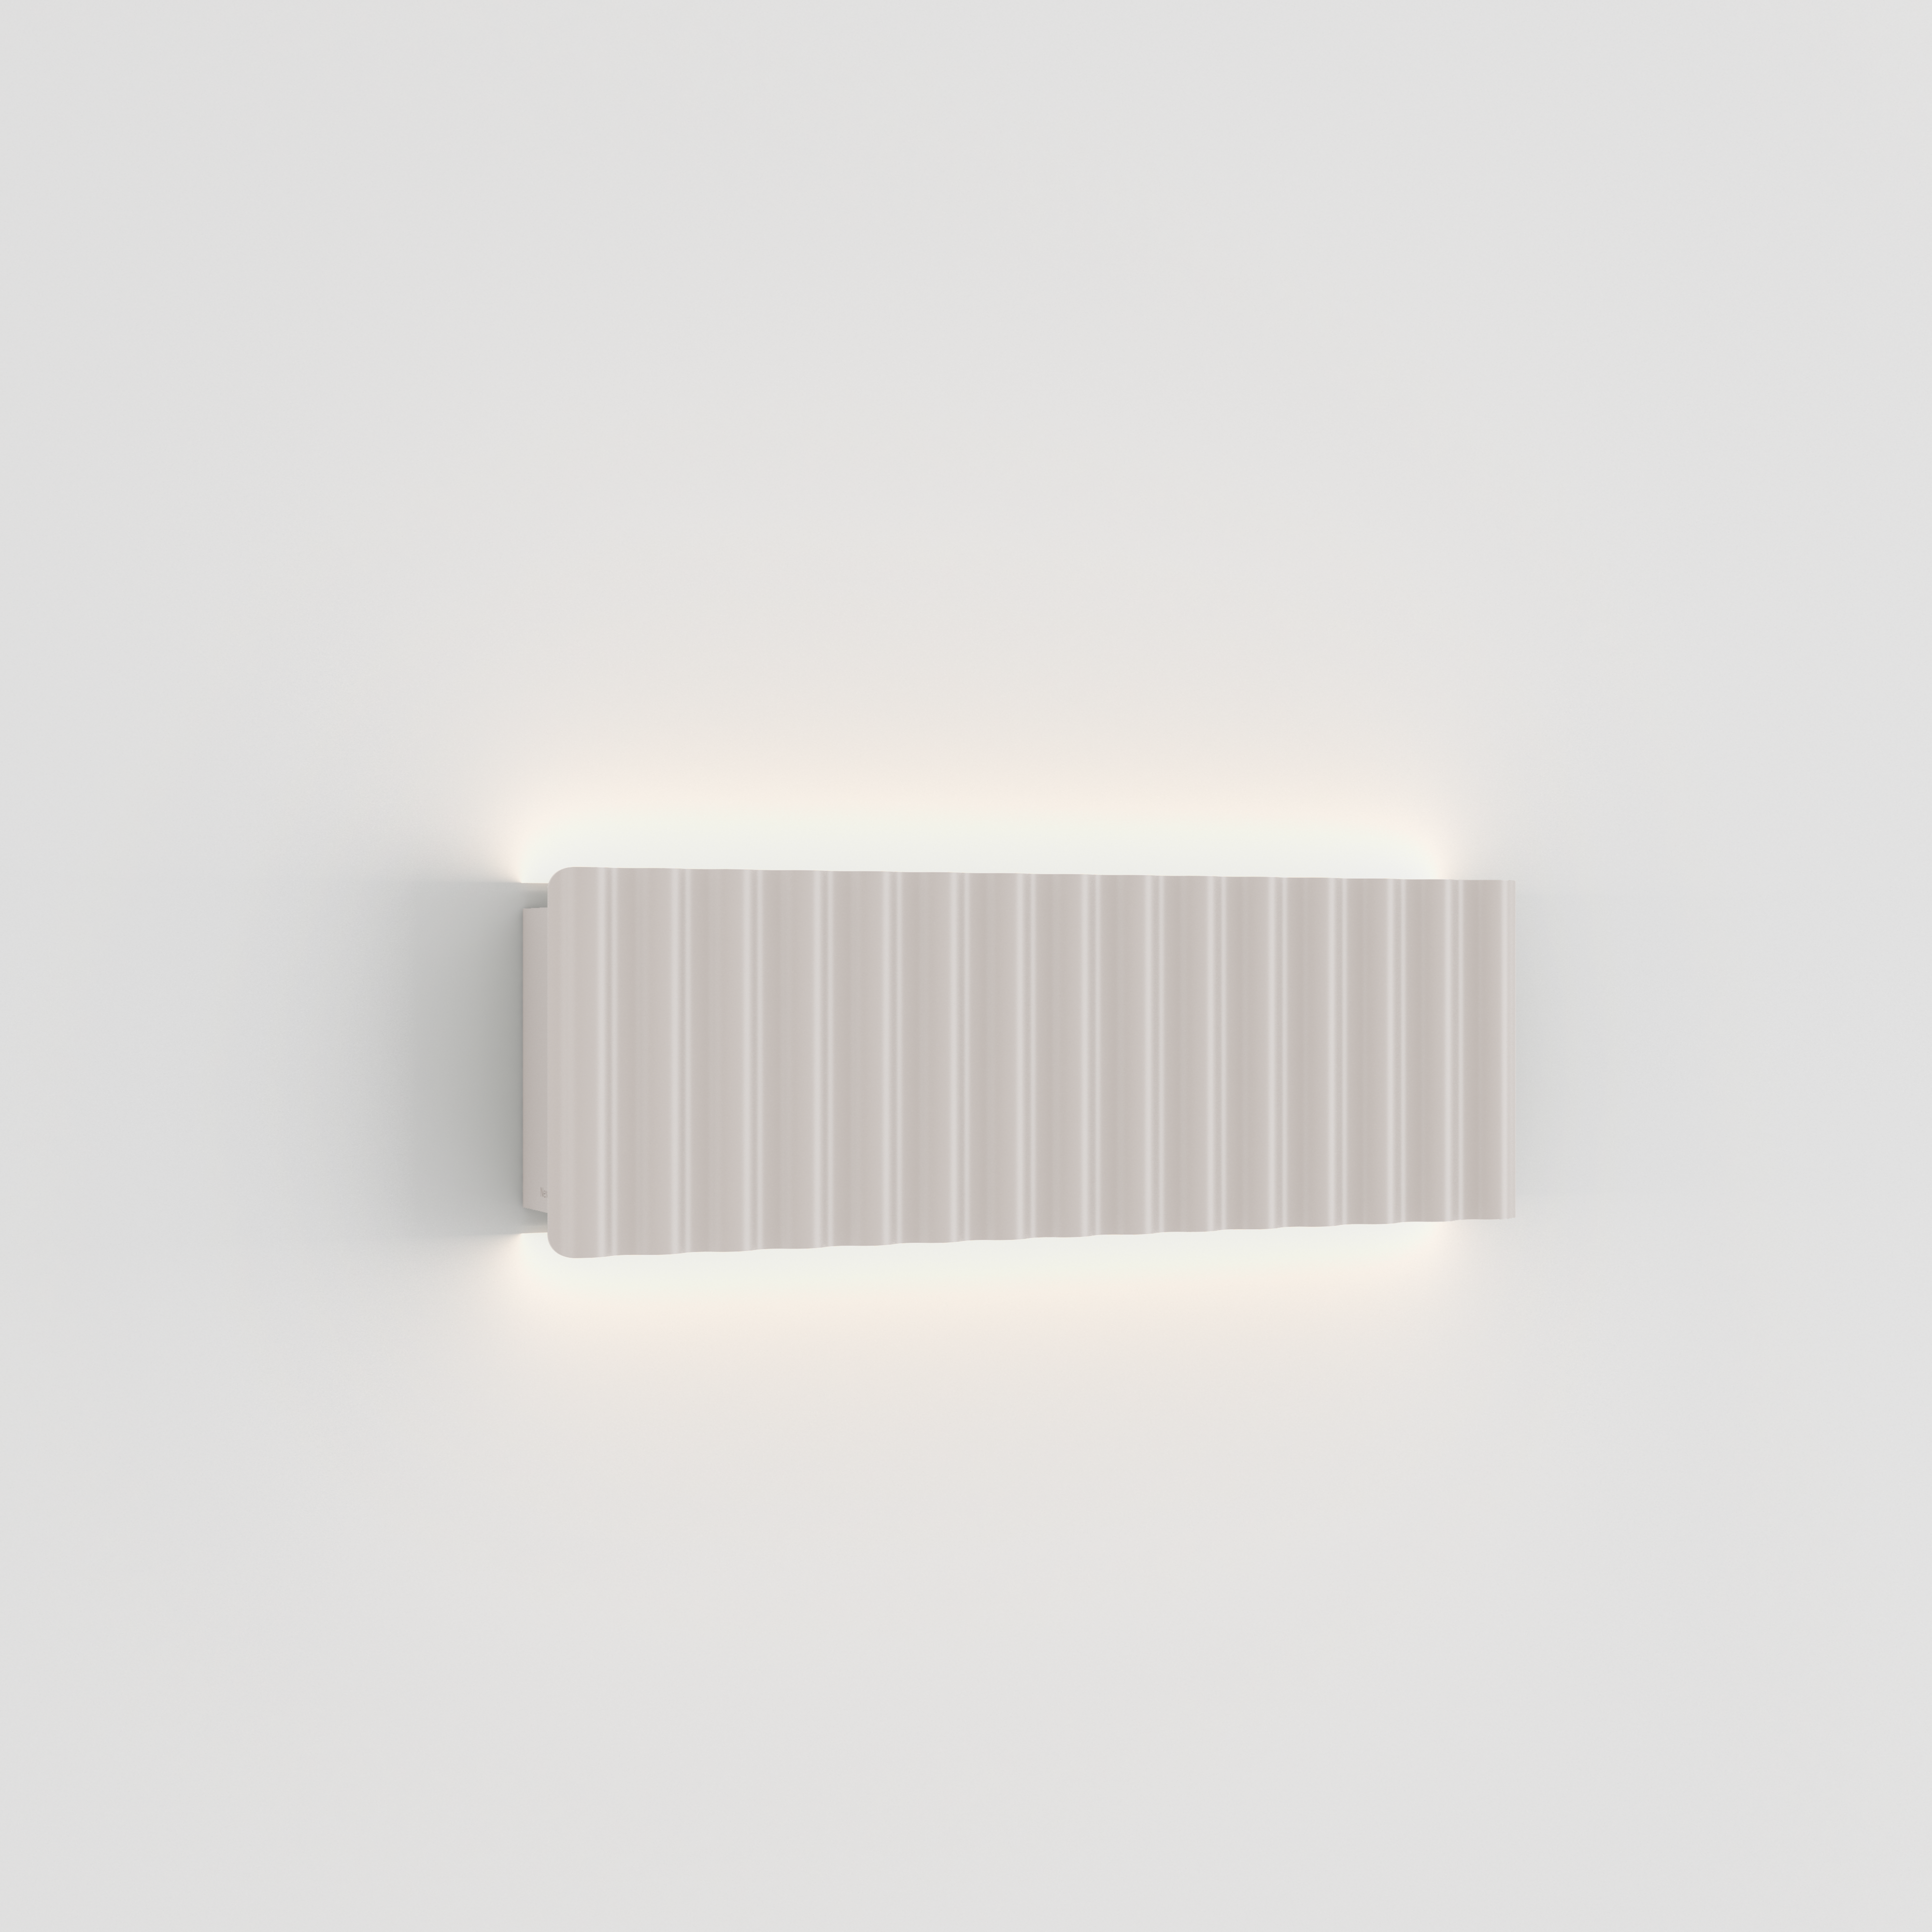 Designer Wall Light for Commercial Buildings